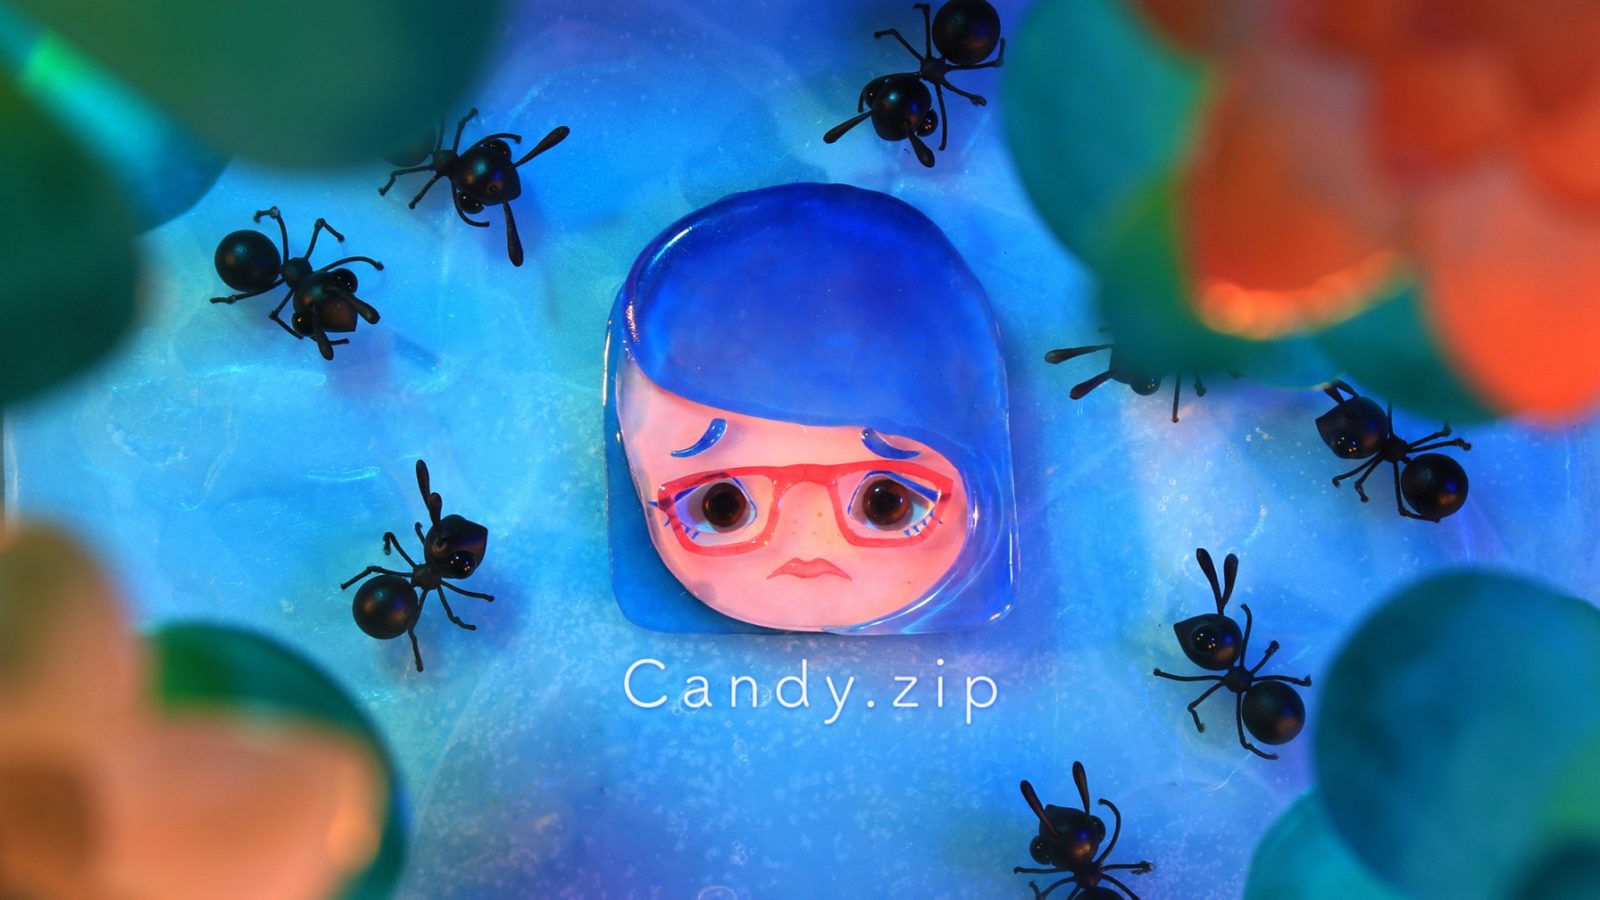 Candy.zip